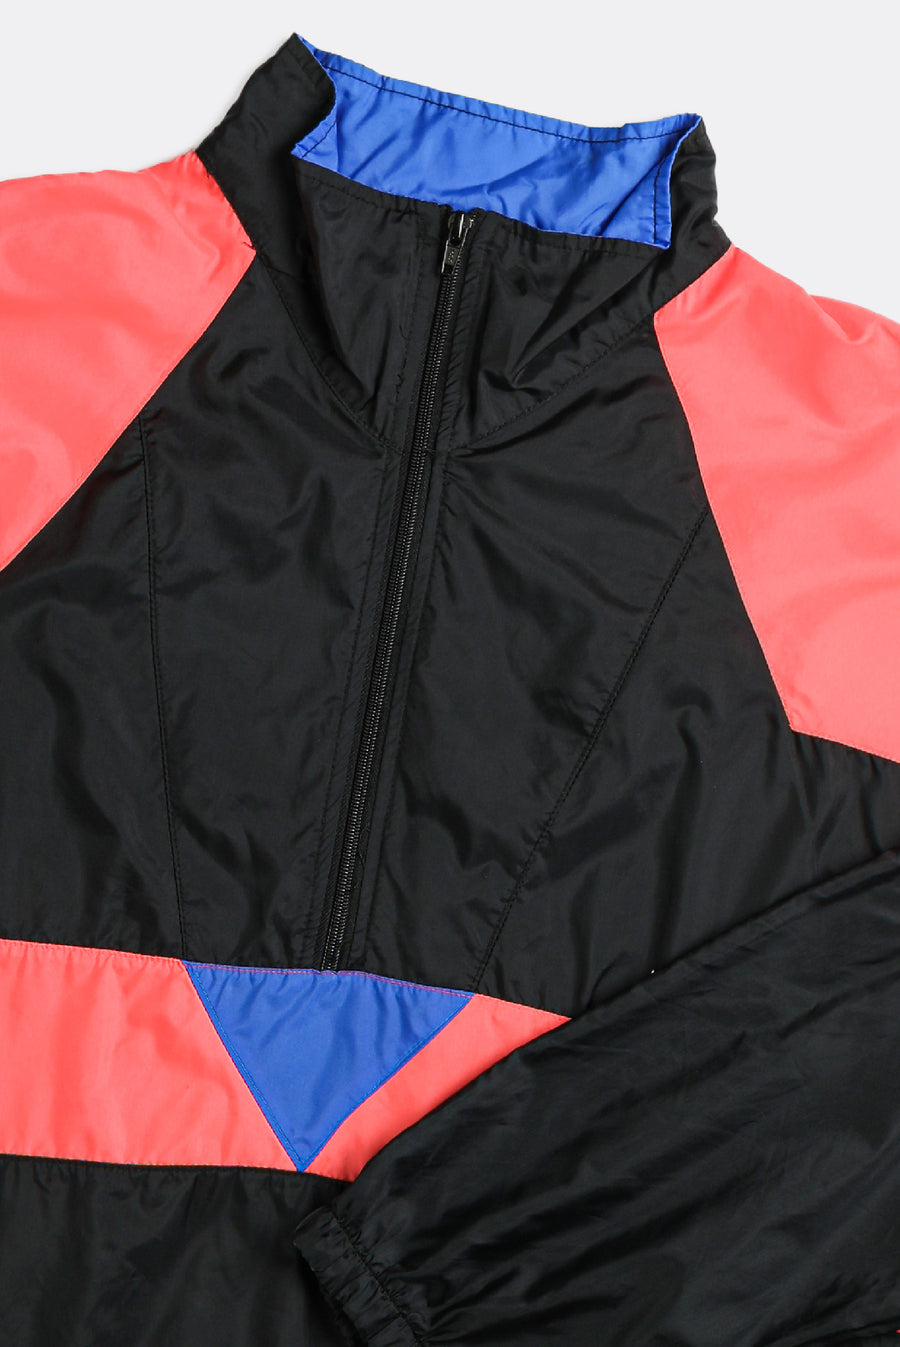 Vintage Nike Pullover Windbreaker Jacket